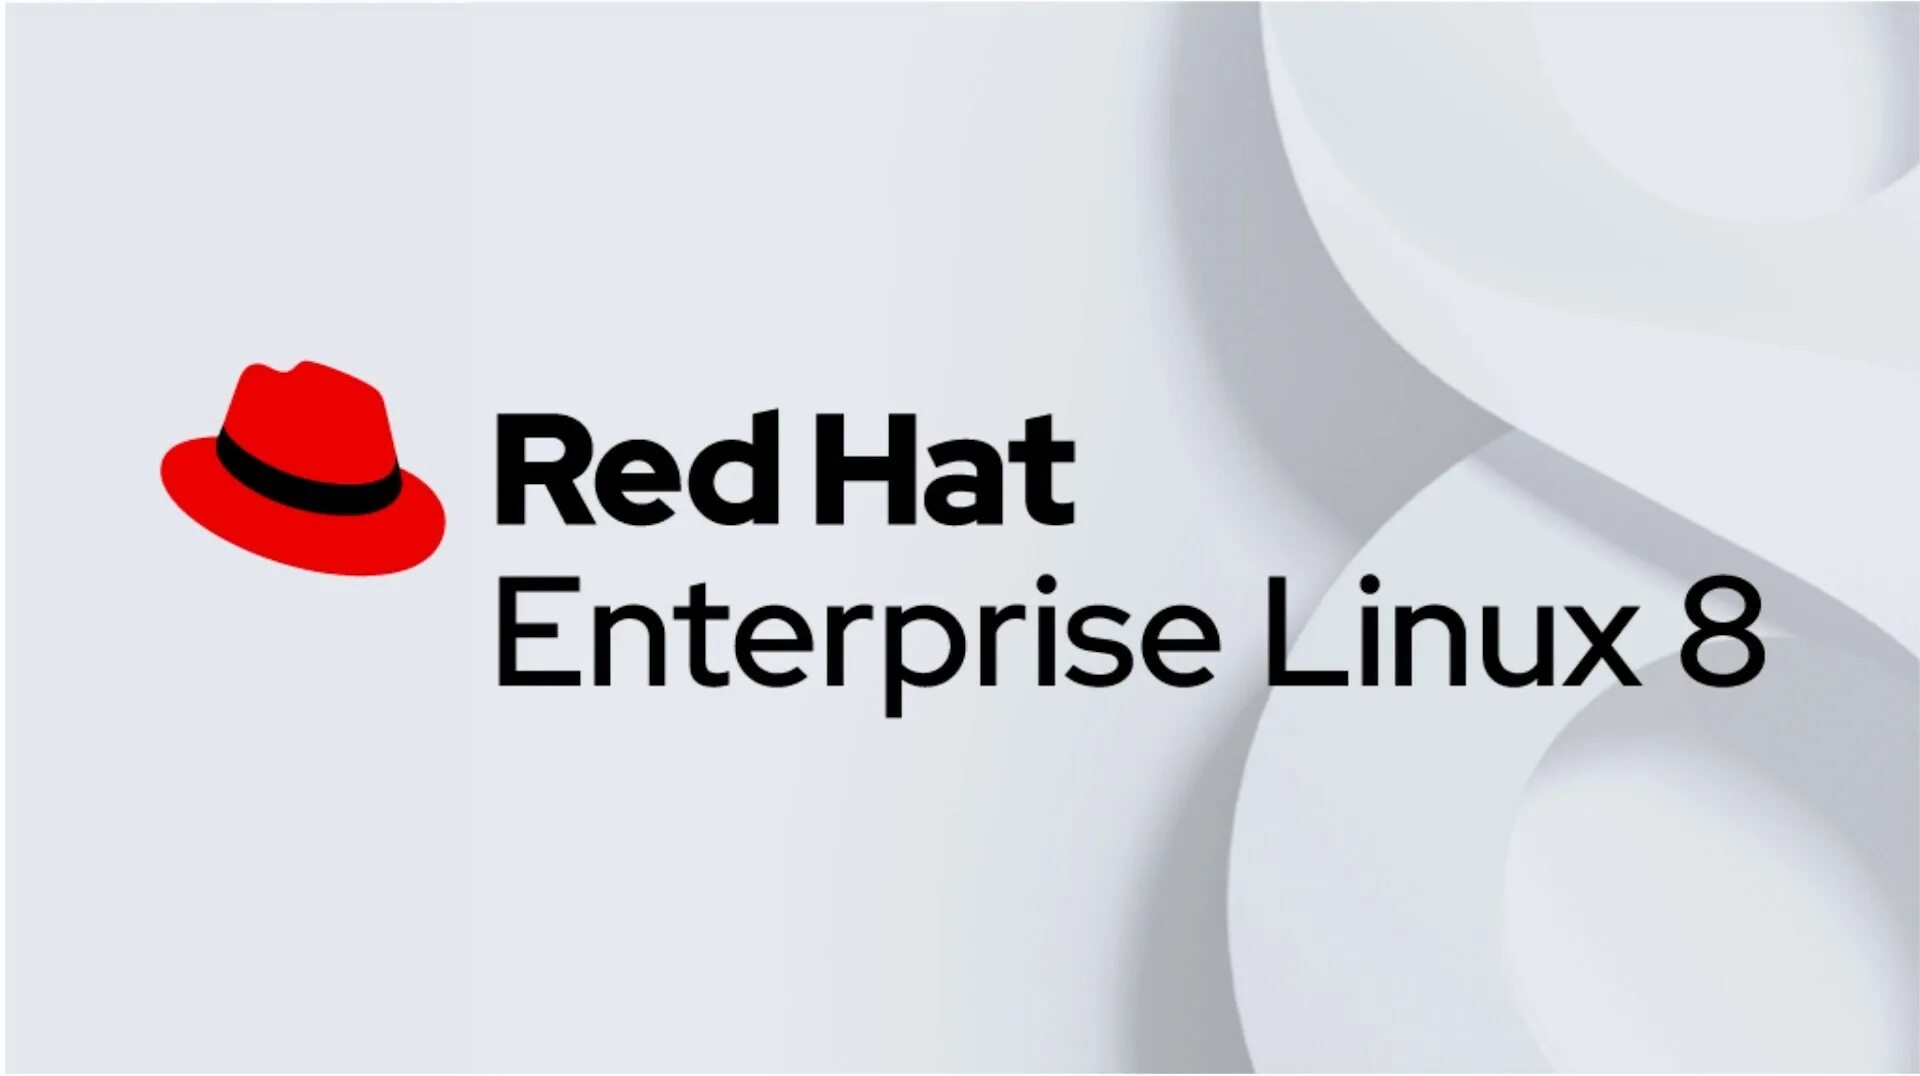 Red hat 7. Red hat Enterprise Linux. Red hat Enterprise Linux (RHEL). RHEL 8. Red hat Enterprise Linux 8.